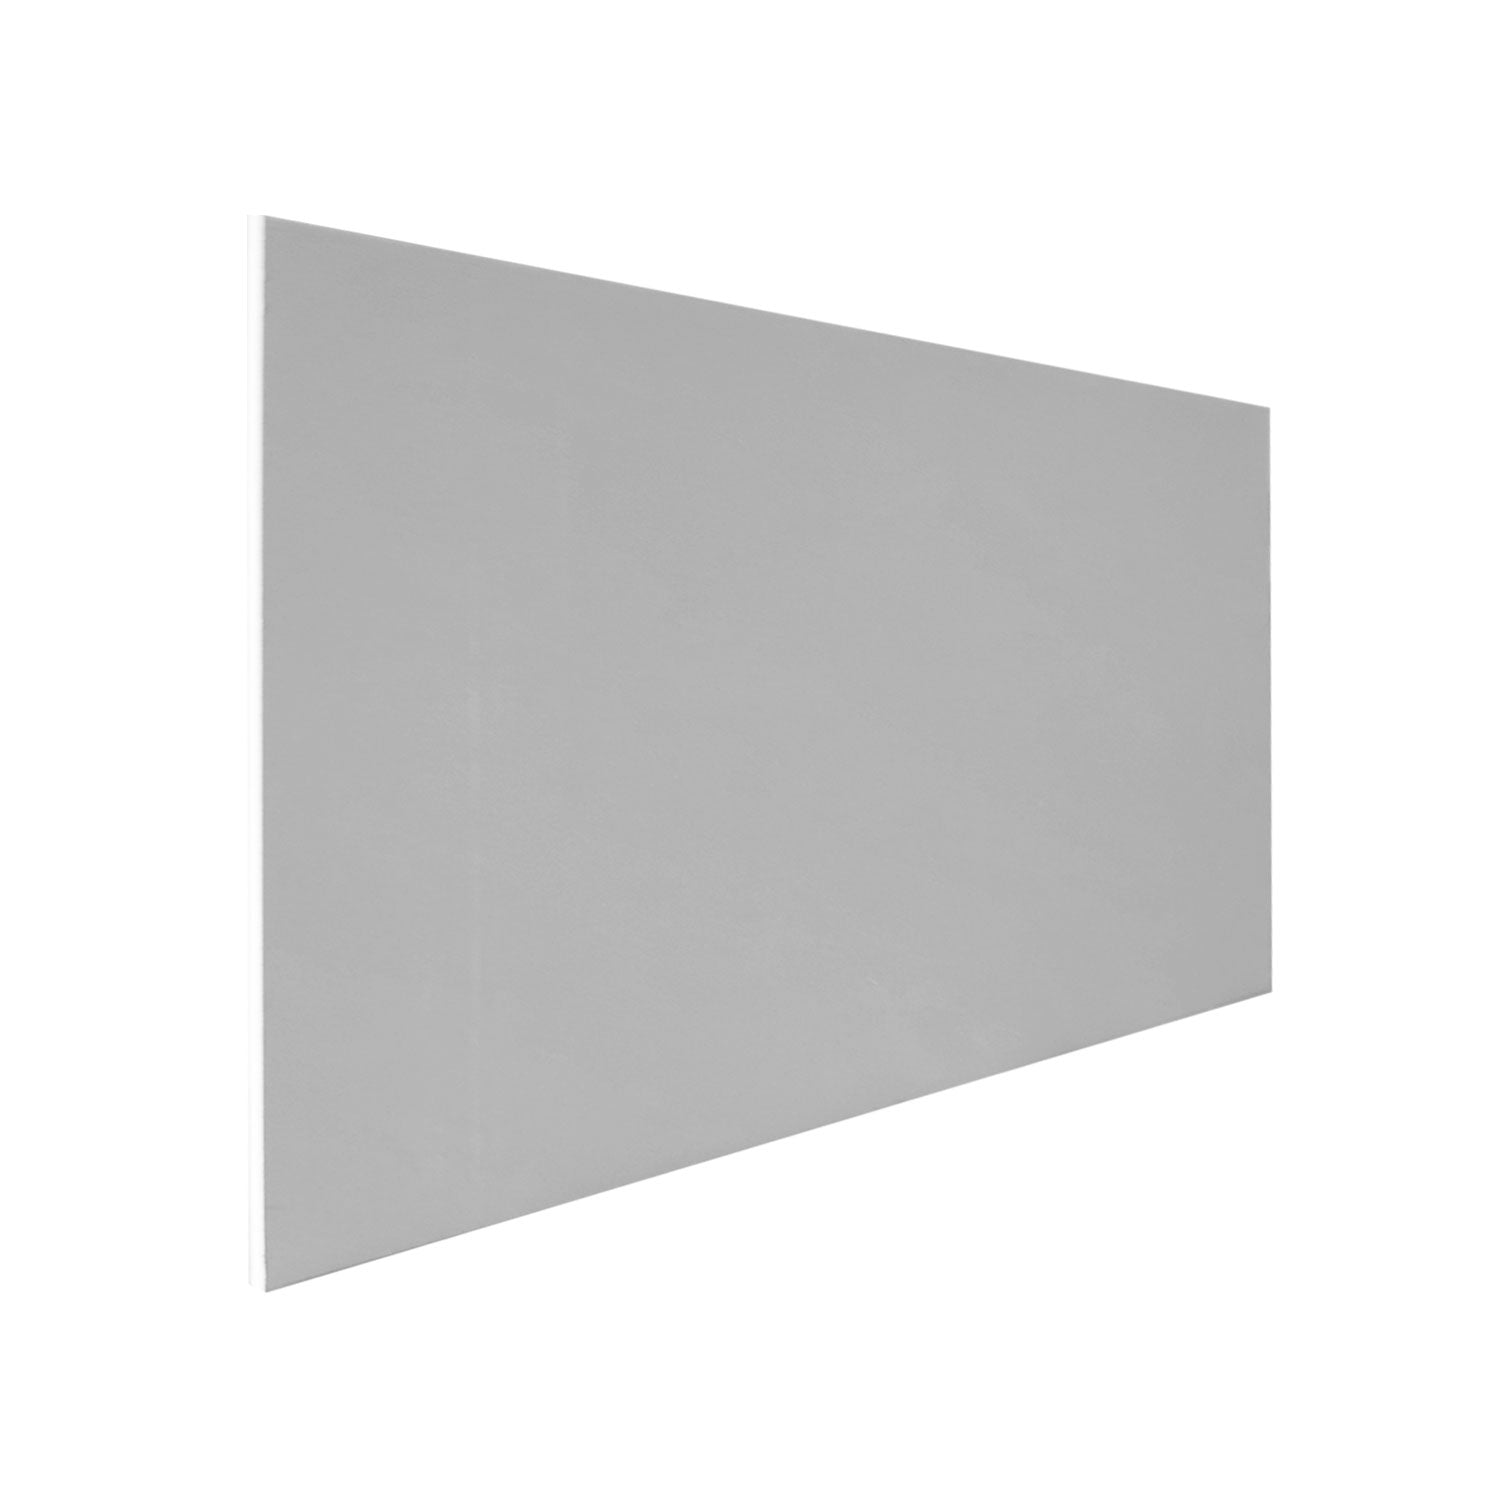 Plasterboard 8' x 4' x 12.5mm Square Edge